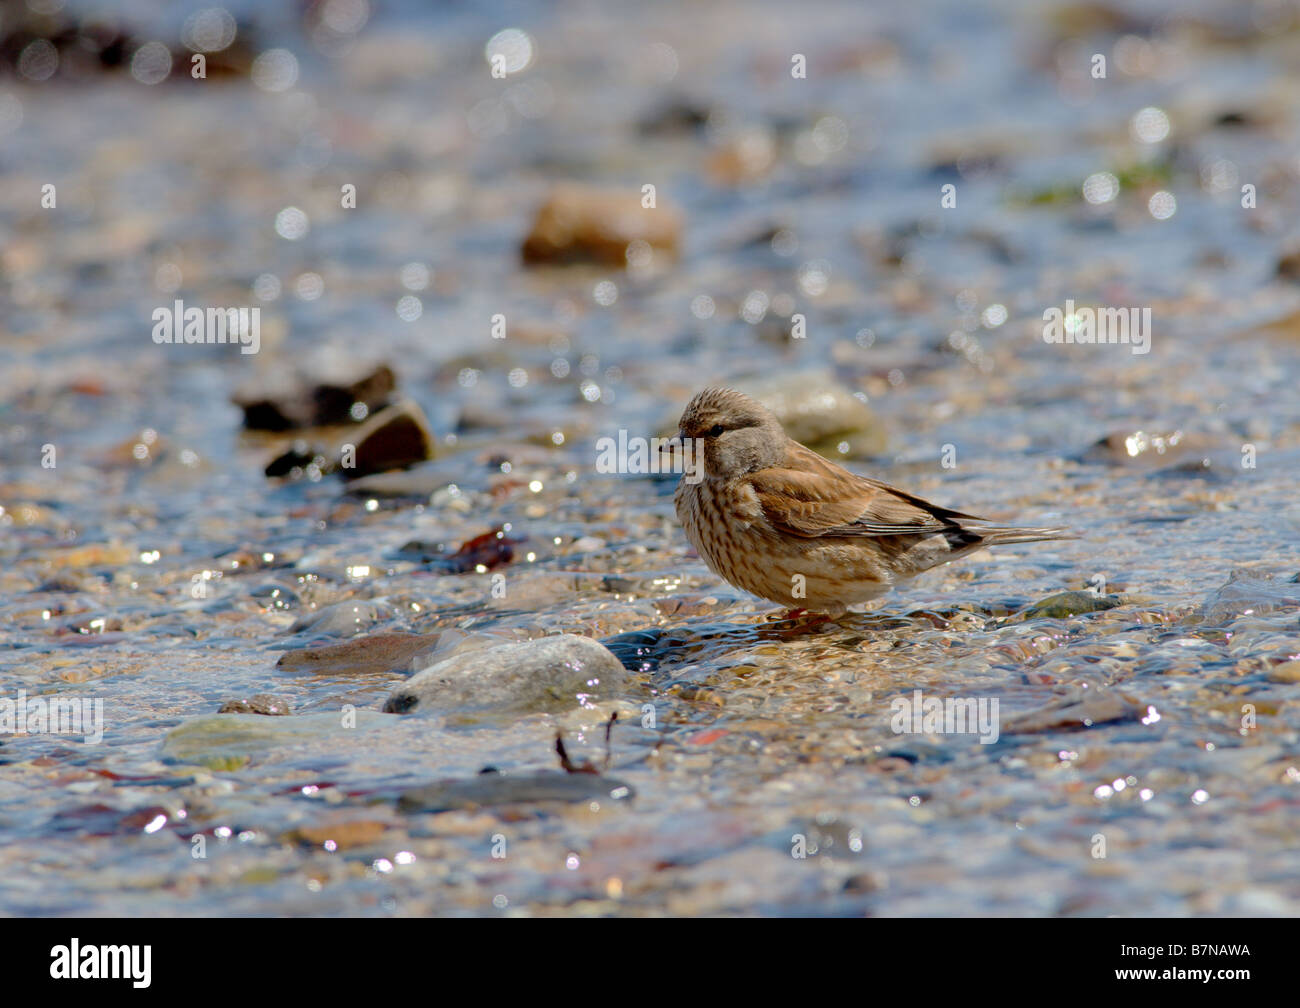 Female Linnit (Carduelis cannabina) bathing in fresh water on a beach Stock Photo